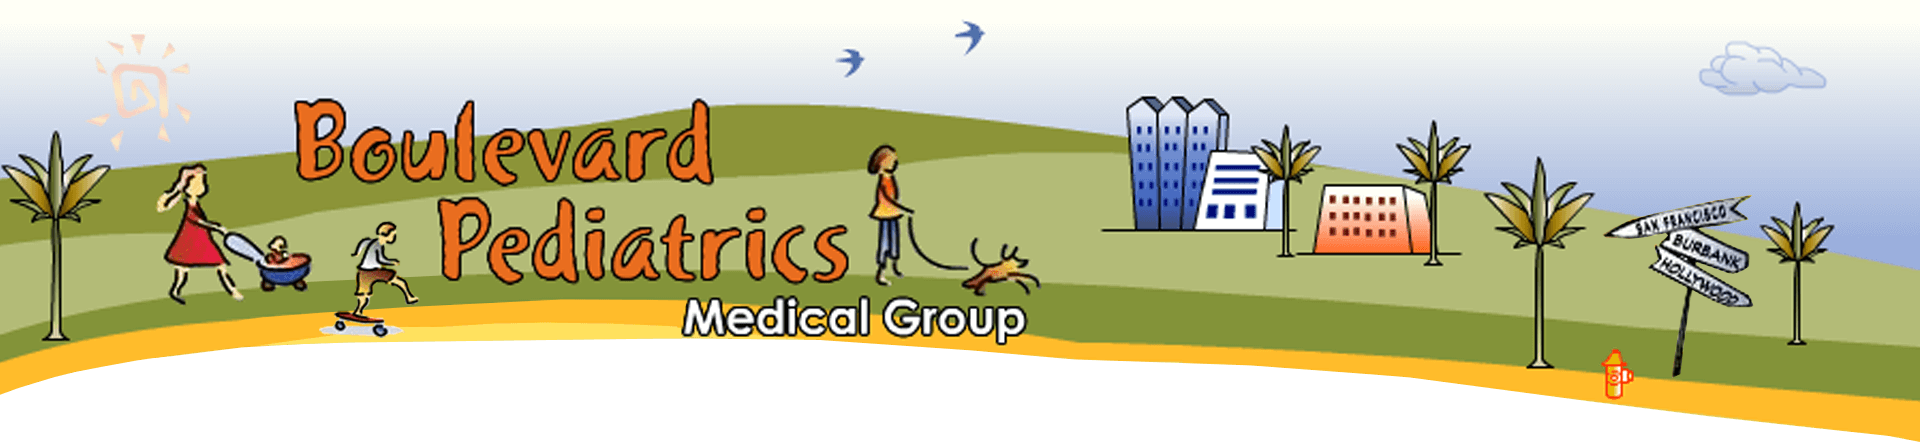 Logo for Boulevard Pediatrics